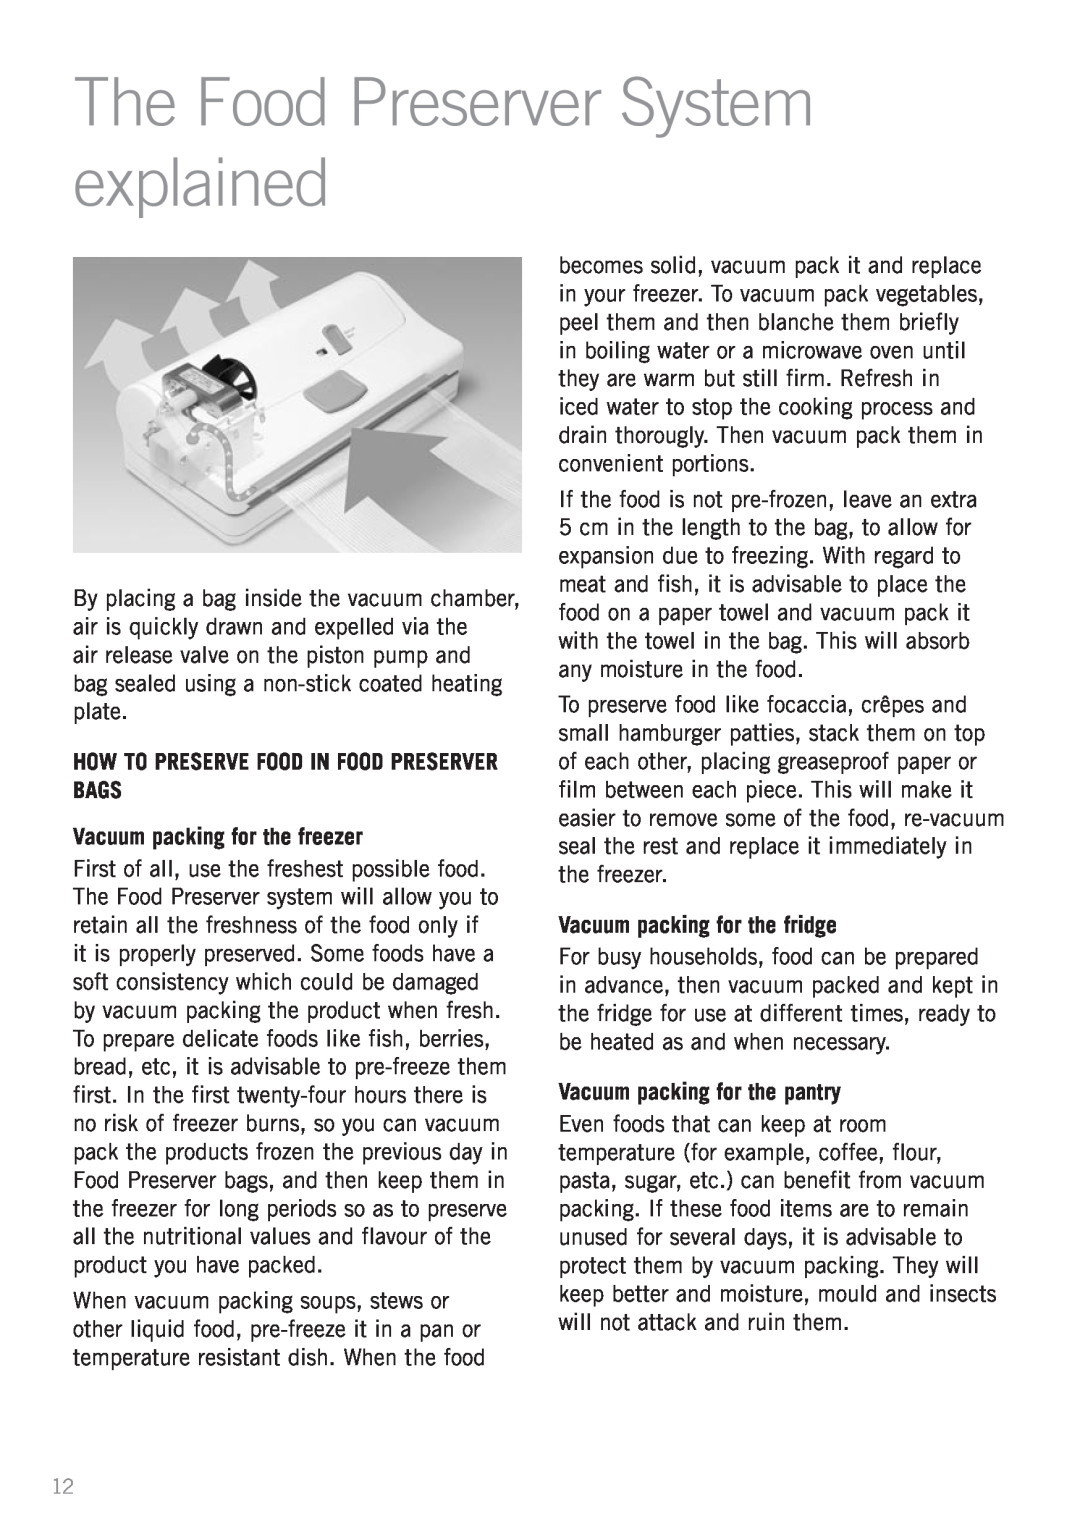 Sunbeam VS5200 manual The Food Preserver System explained, How To Preserve Food In Food Preserver Bags 